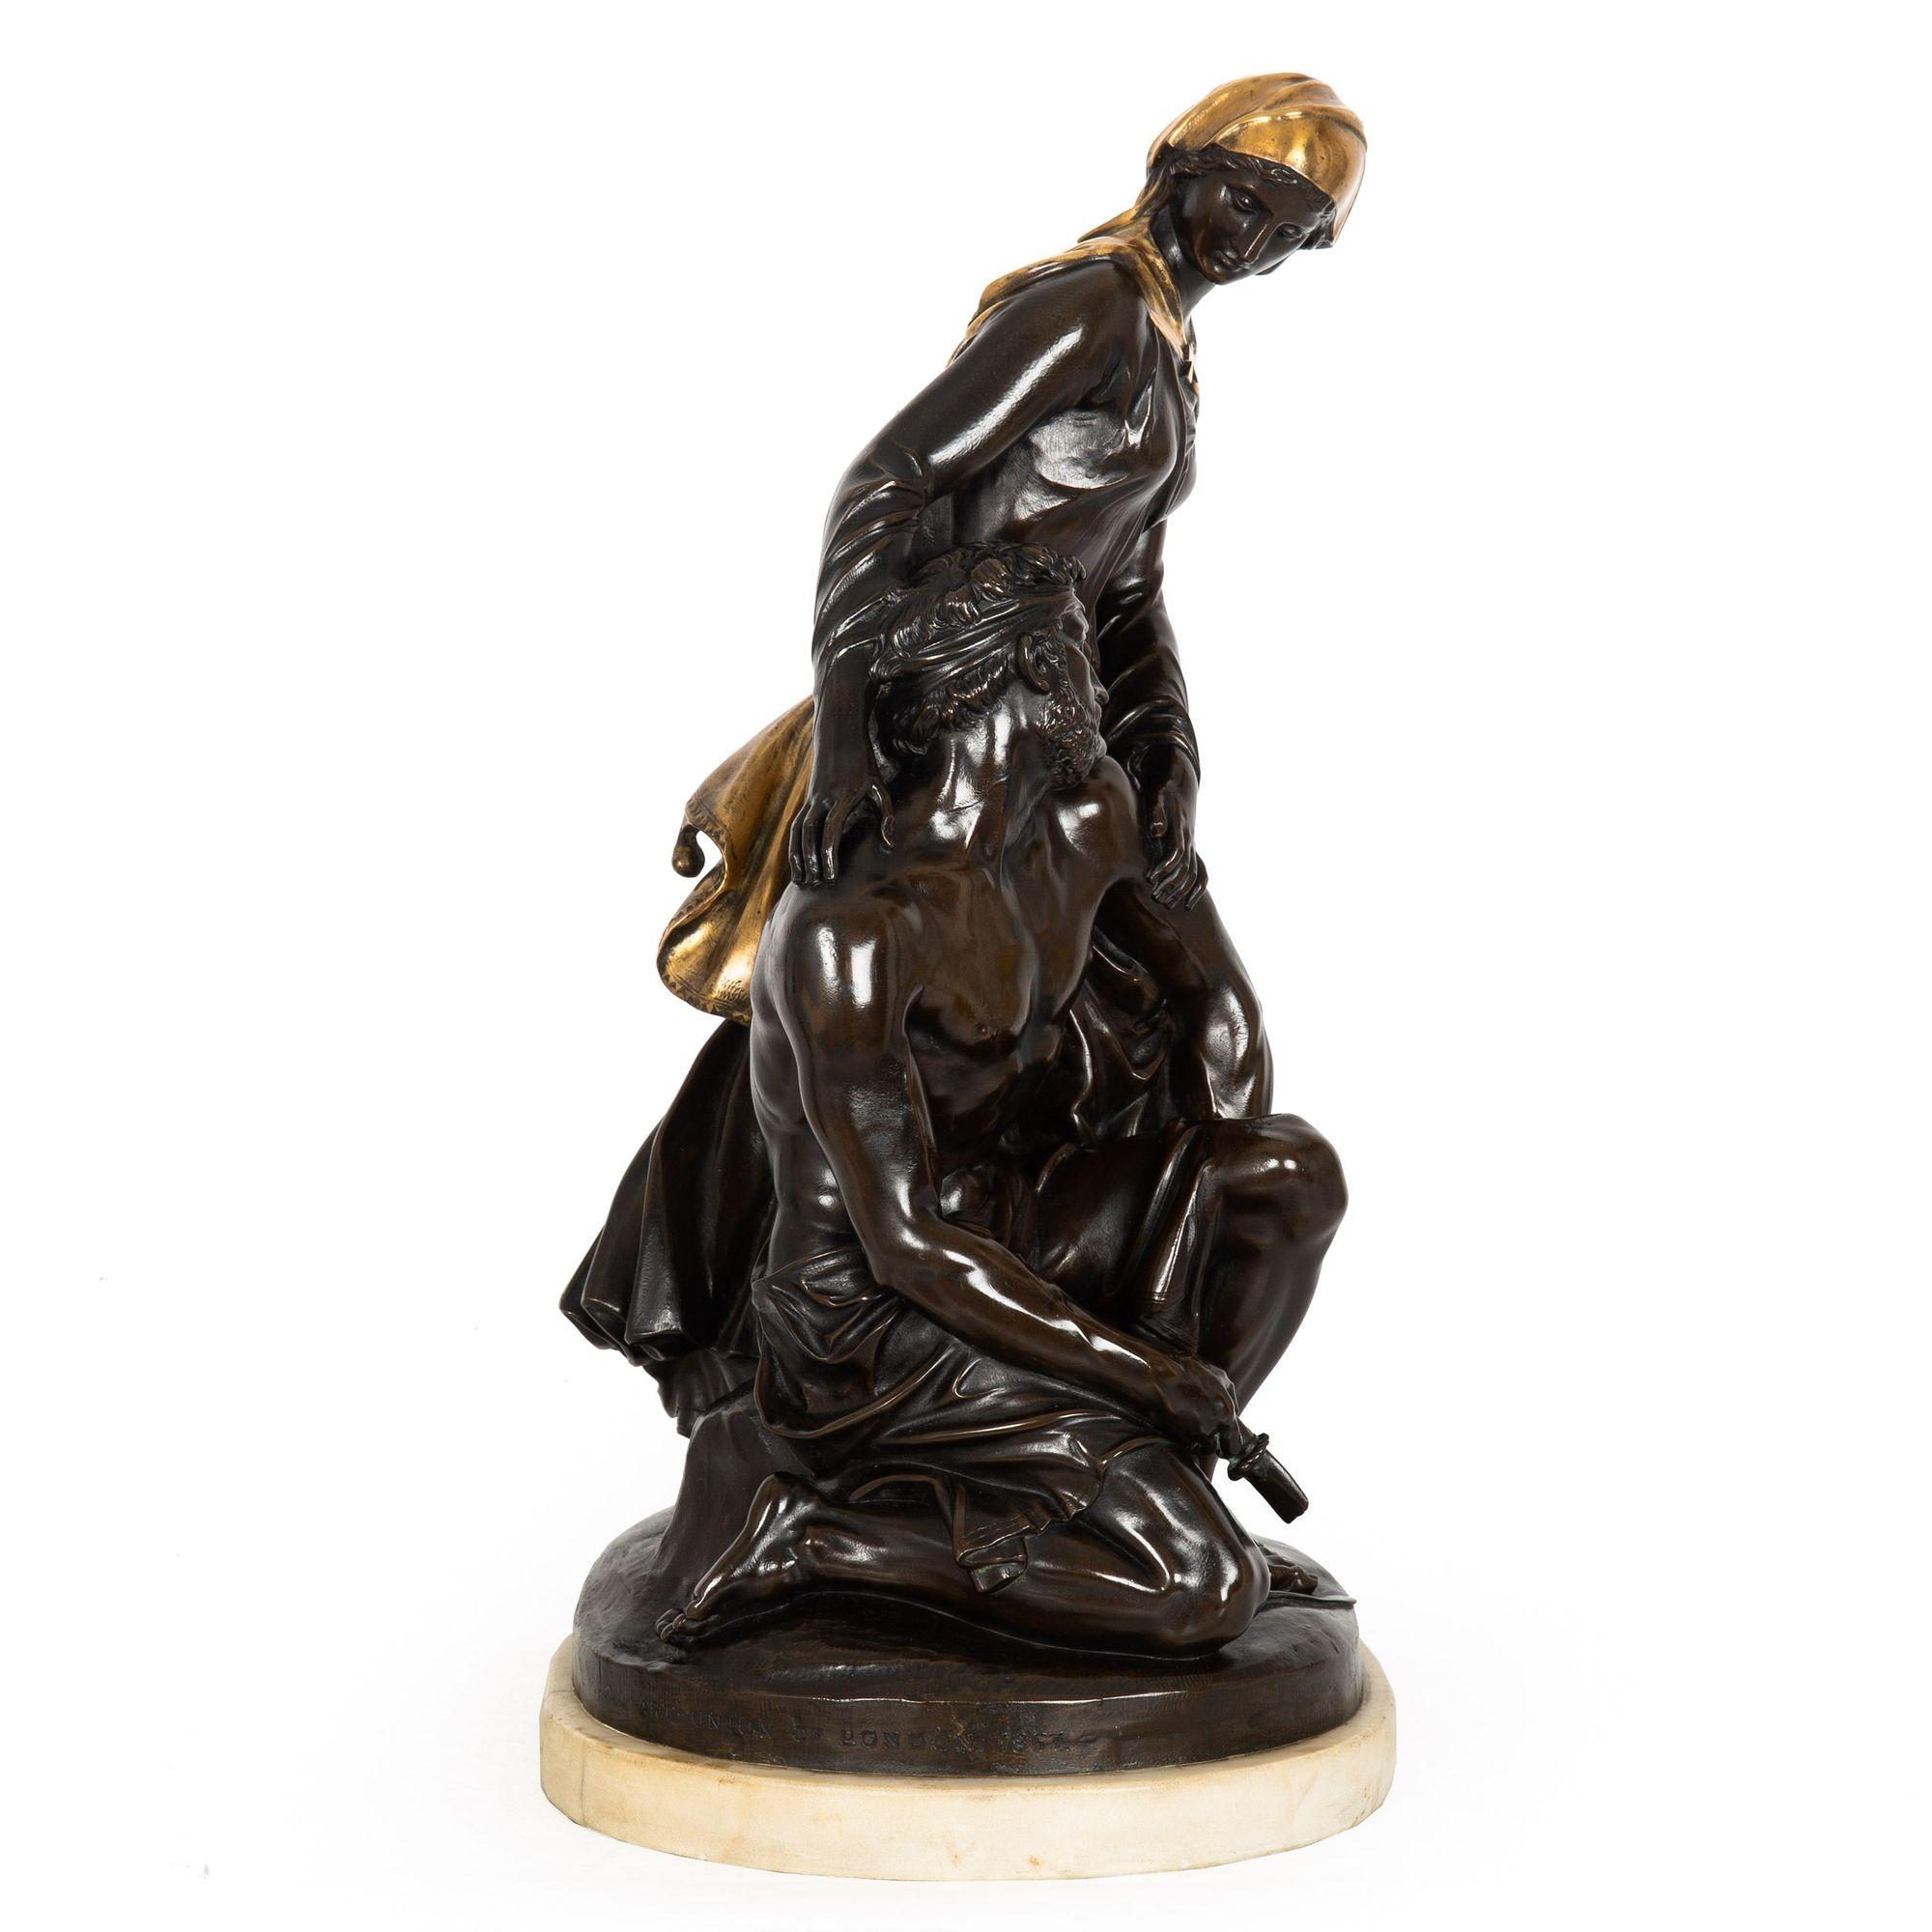 Romantic English Bronze Sculpture “Mercy on Battlefield” (1856), Edward Bowring Stephens